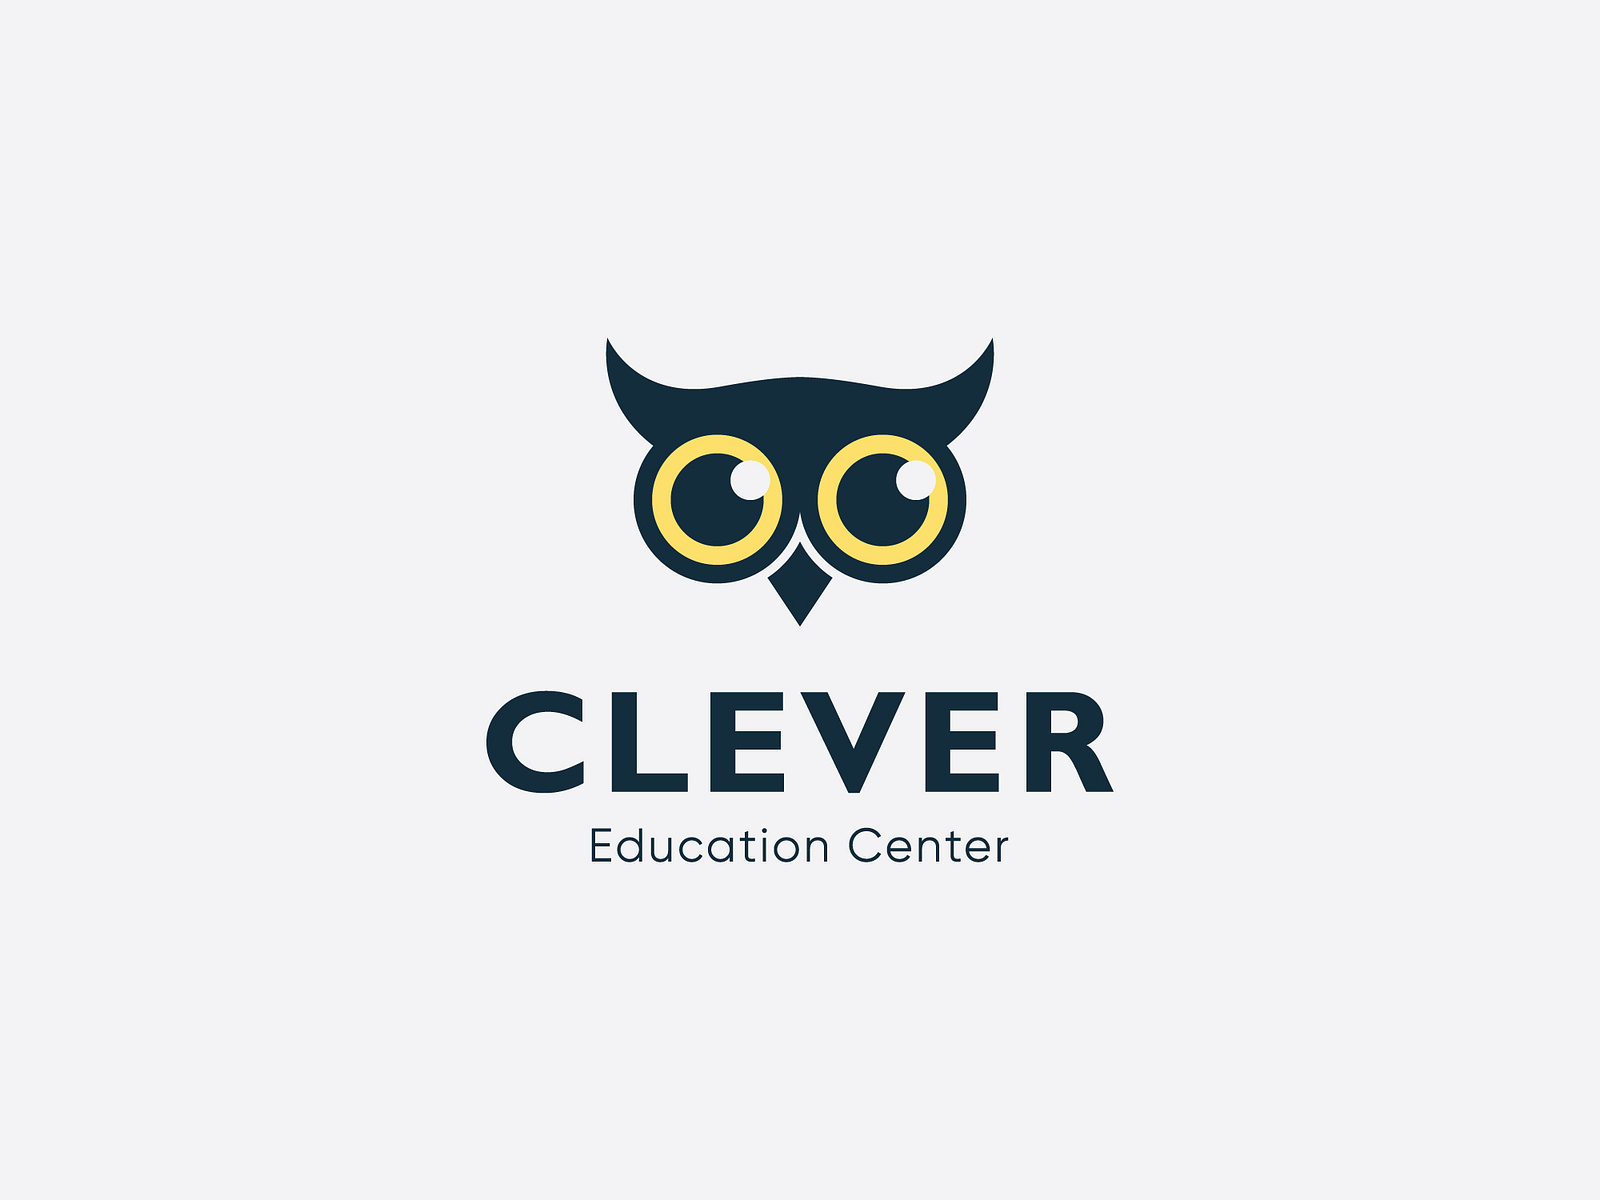 Logo Design with an Owl by Dina Belashova on Dribbble